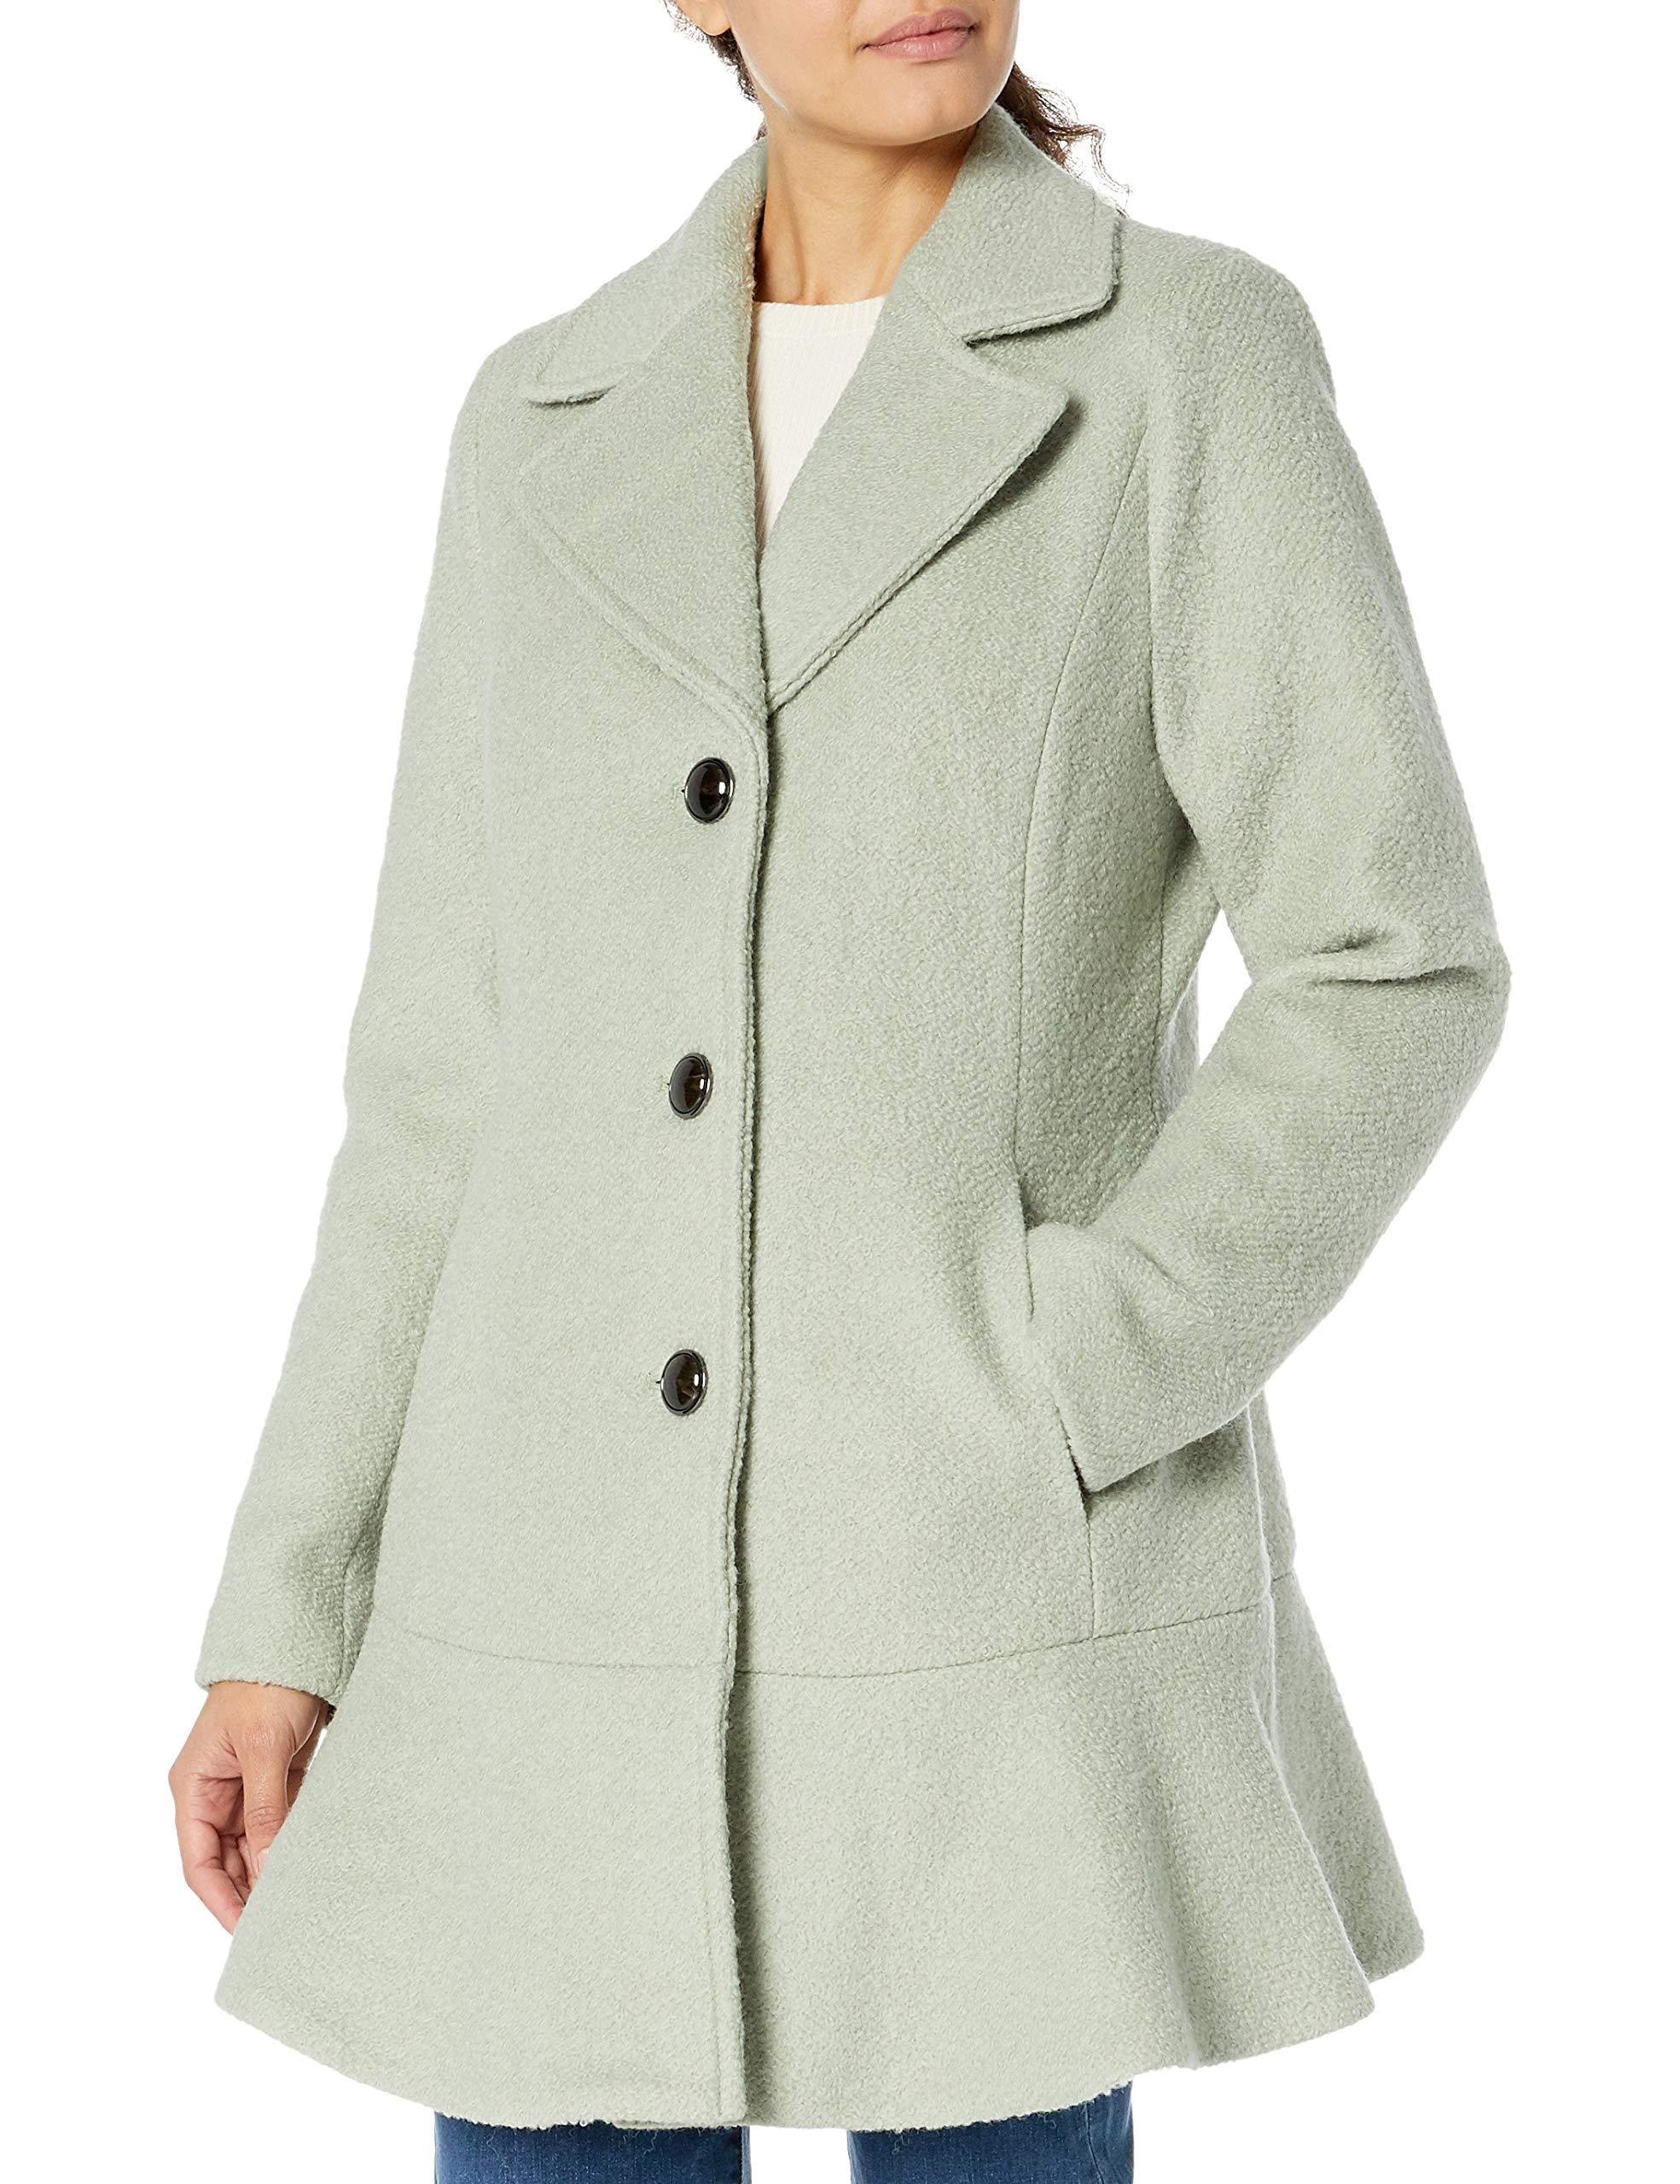 Kensie Casual Wool Coat in Mint (Green) - Lyst